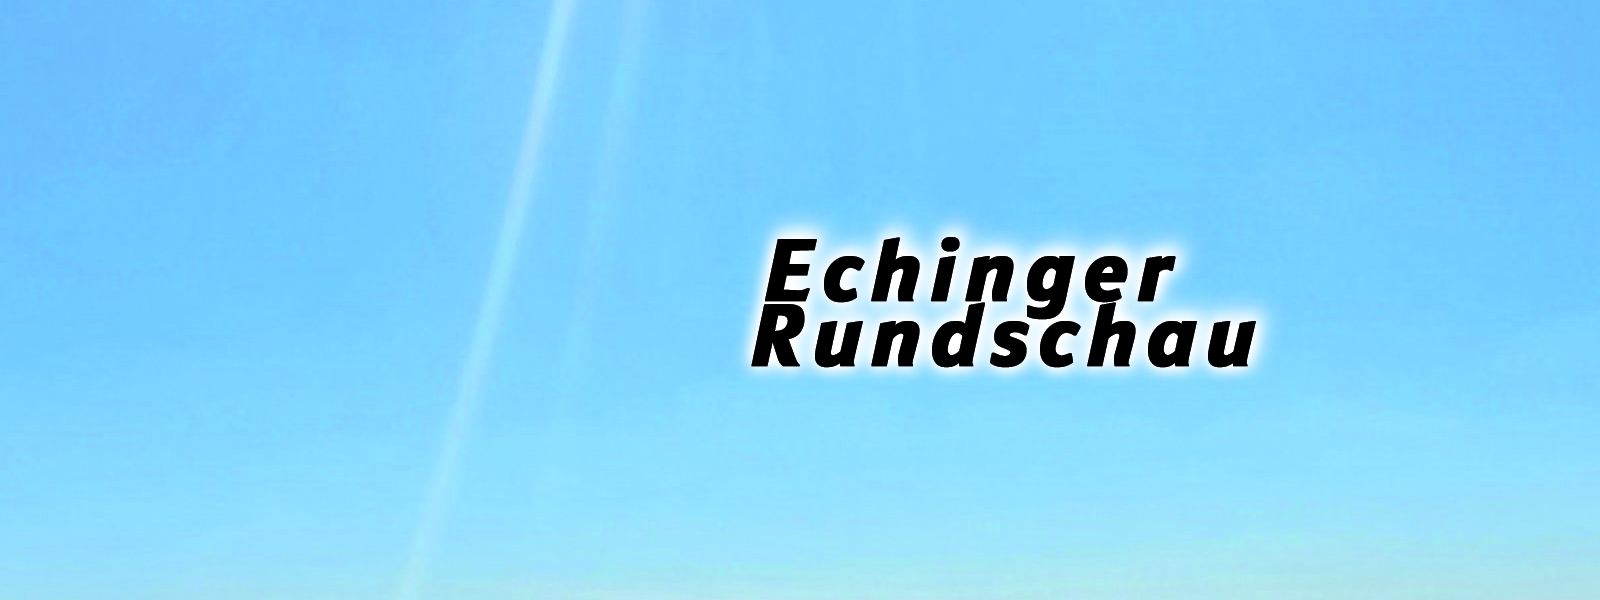 Echinger Rundschau